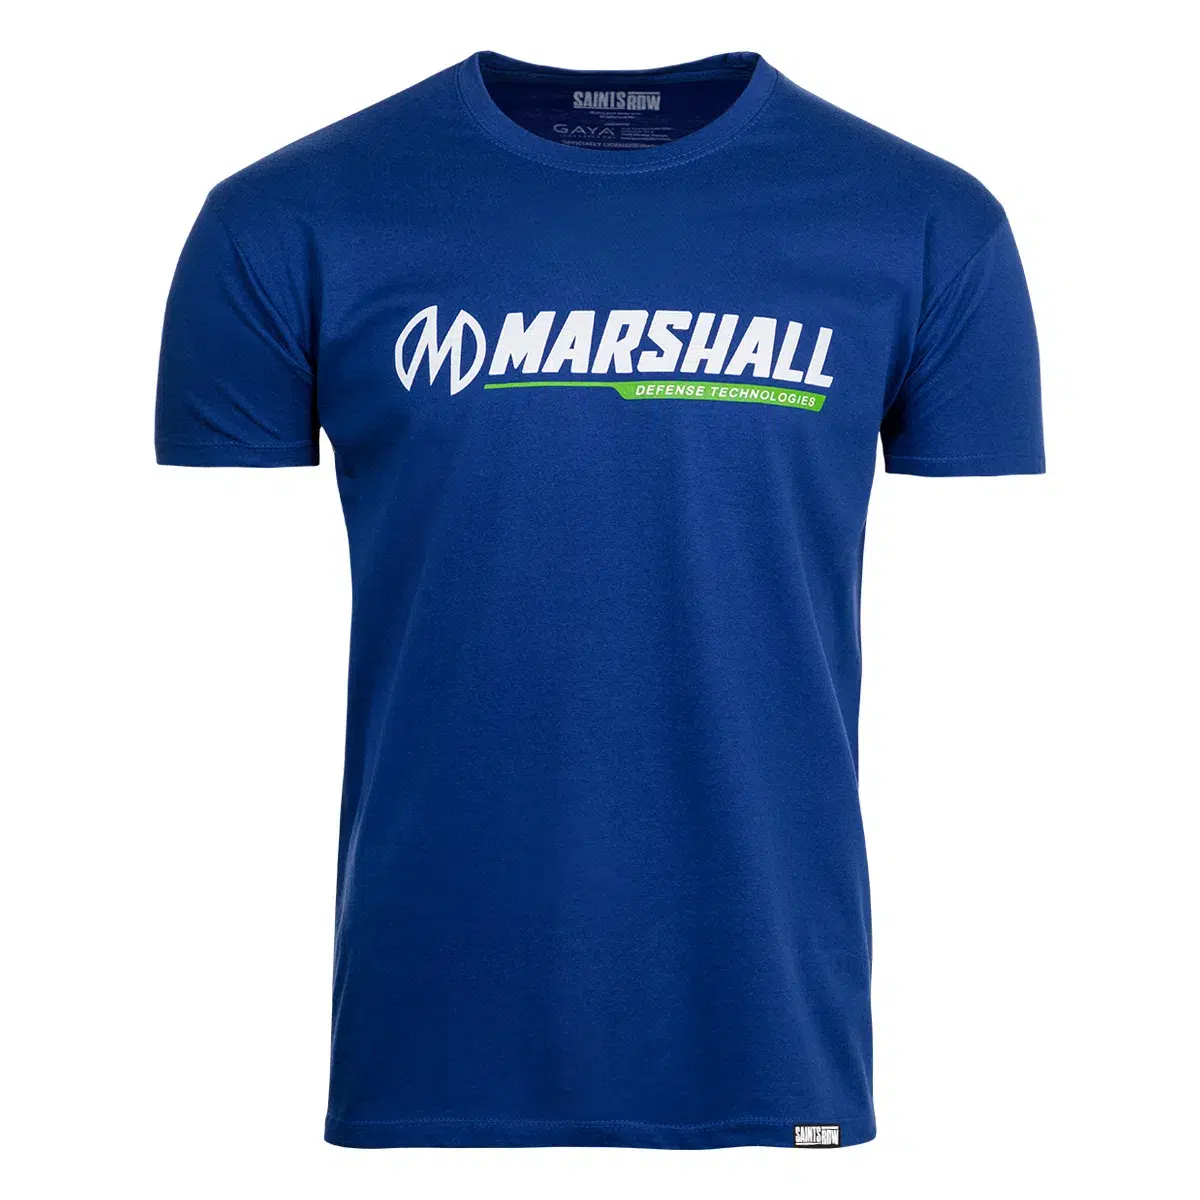 Saints Row T-Shirt "Marshall" French Navy XXL